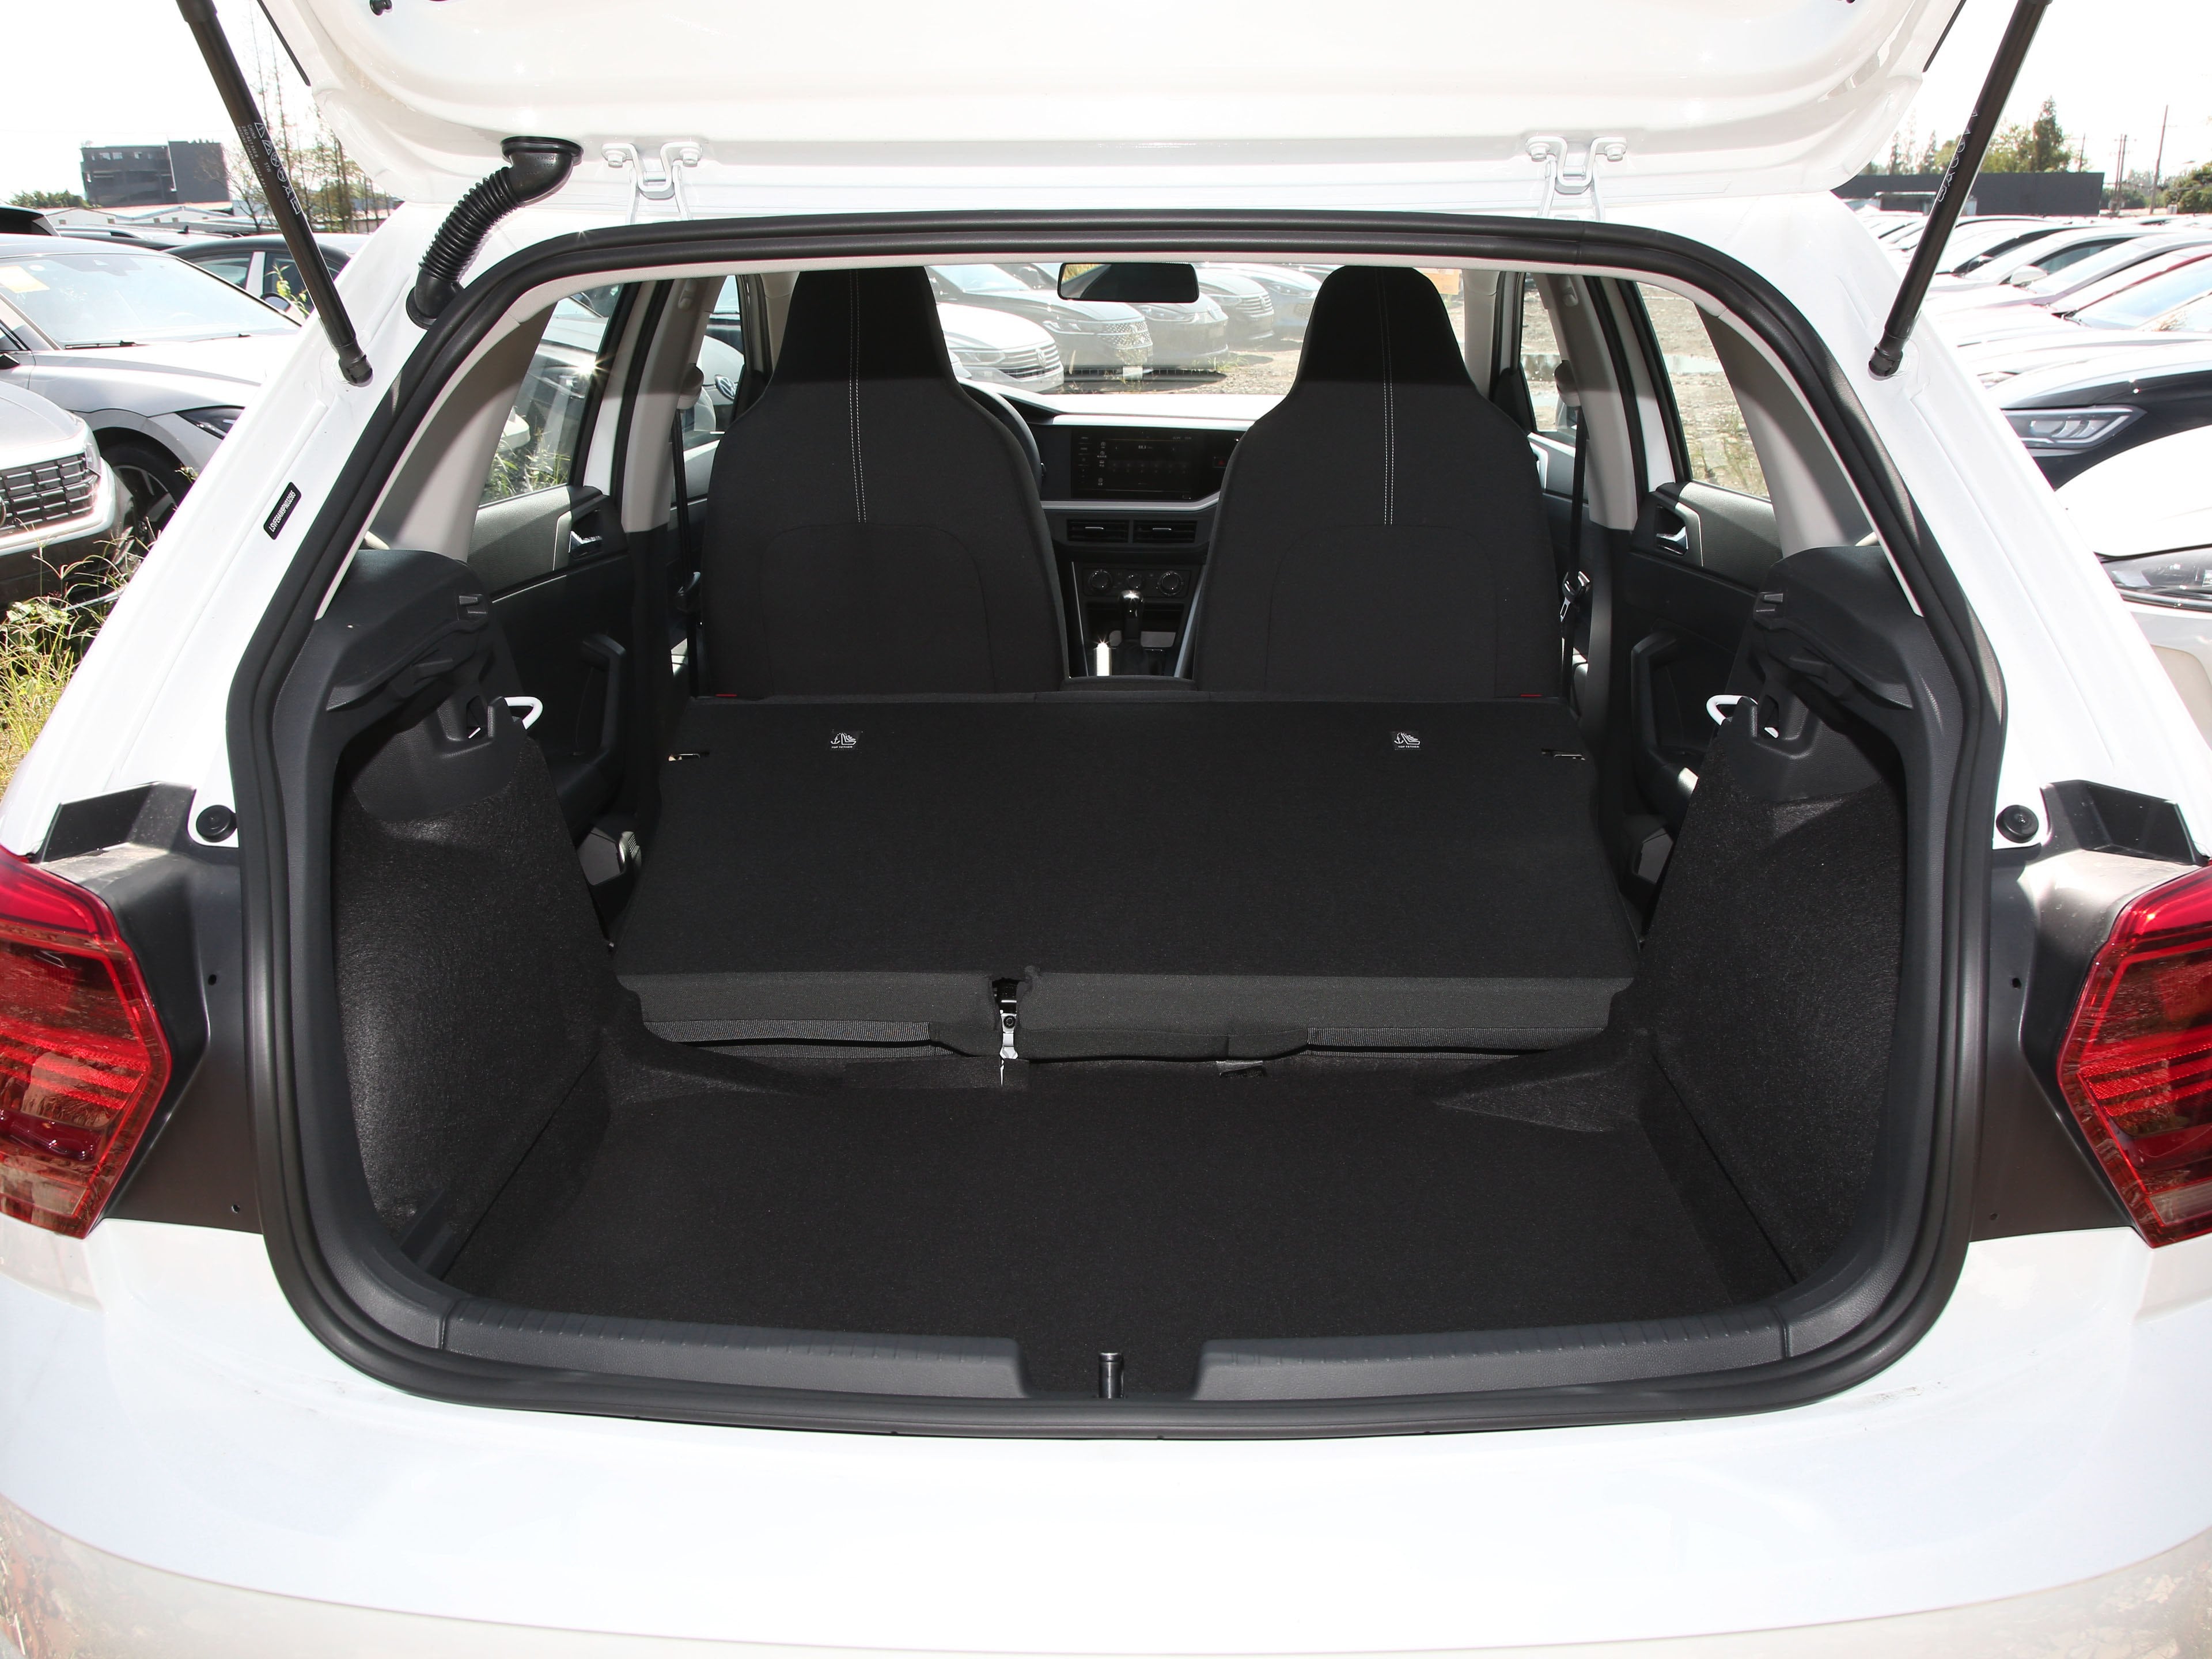 SAIC VW POLO 2023 PLUS 1.5L Fuel Sedan 110hp L4 Gasoline Vehicle Two-box Passenger Car